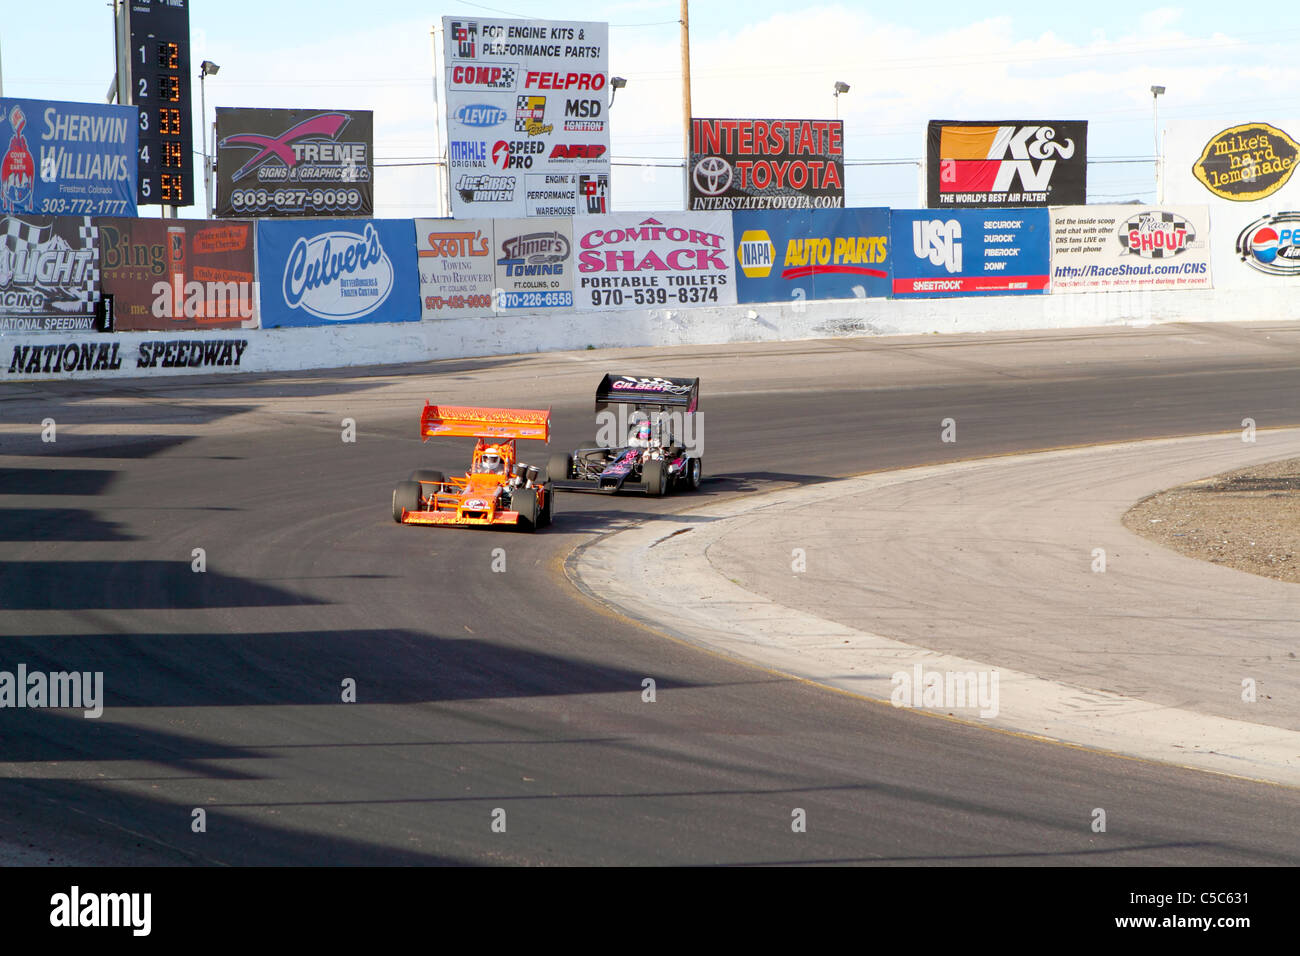 Denver, Colorado - Joe Gallegos in the #14 car leads Matt Gilbert in the #54 car during an ERA Superstock race. Stock Photo